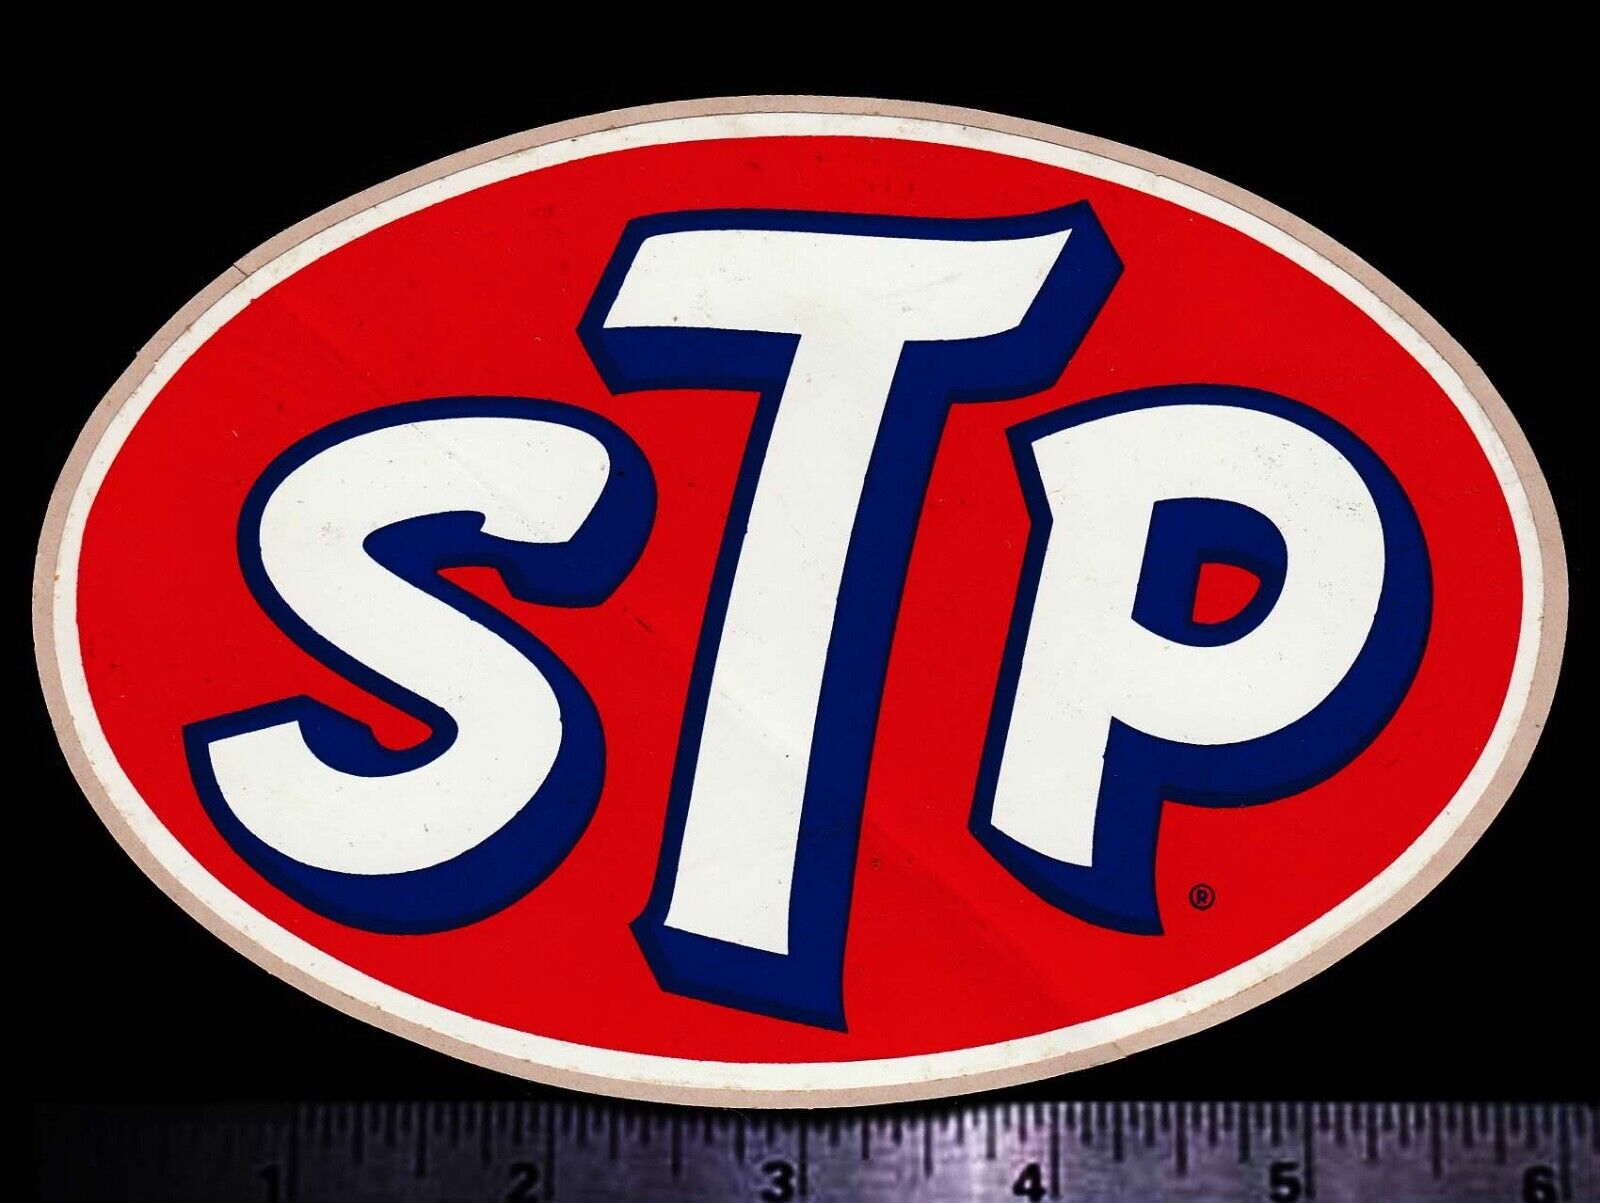 STP - Original Vintage 60's 70's Racing Decal/Sticker 5.75 Inch - Richard Petty